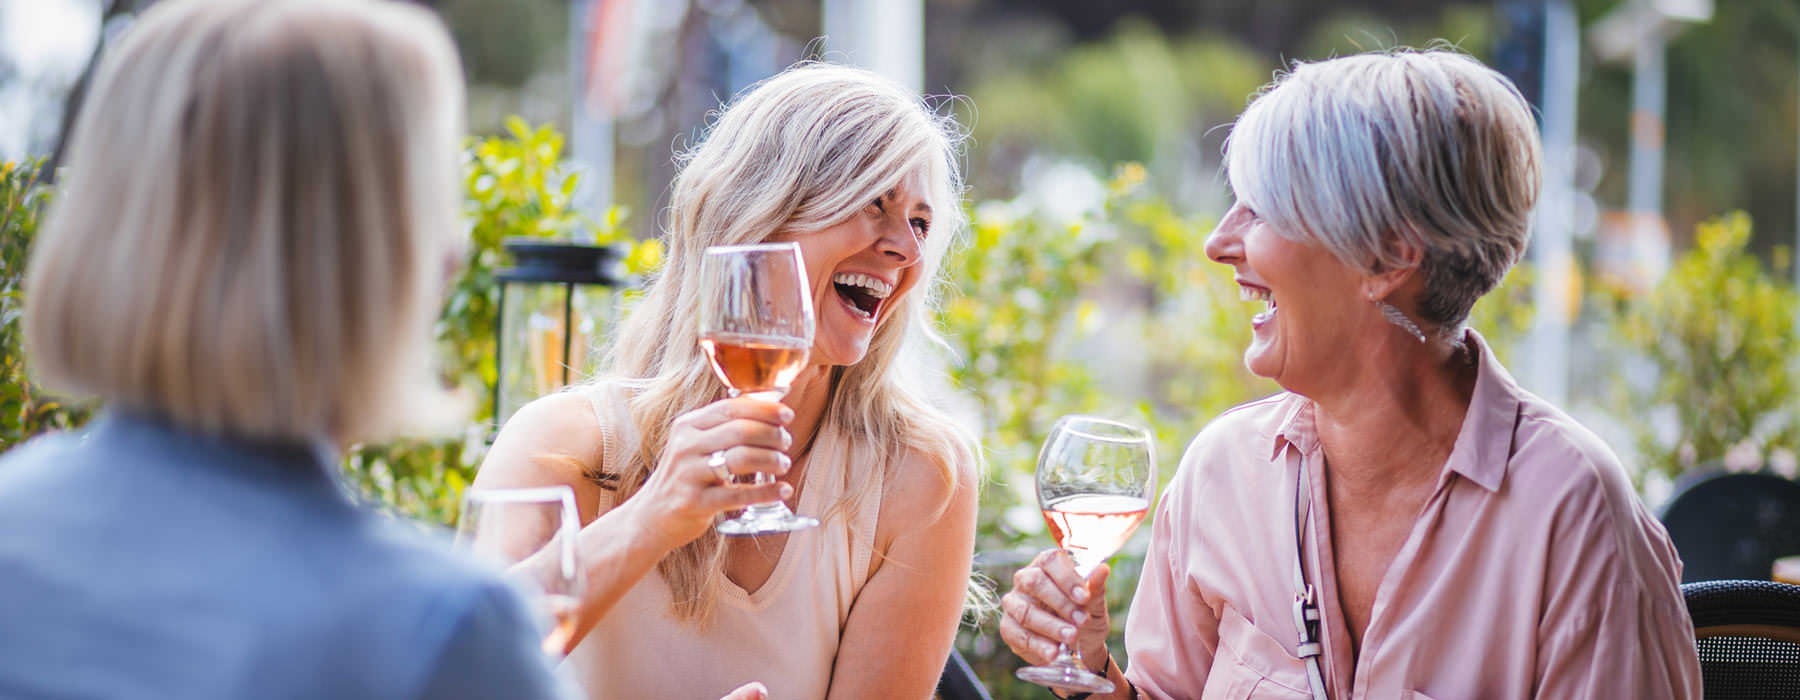 Lifestyle photo of women raise glasses of wine outdoors